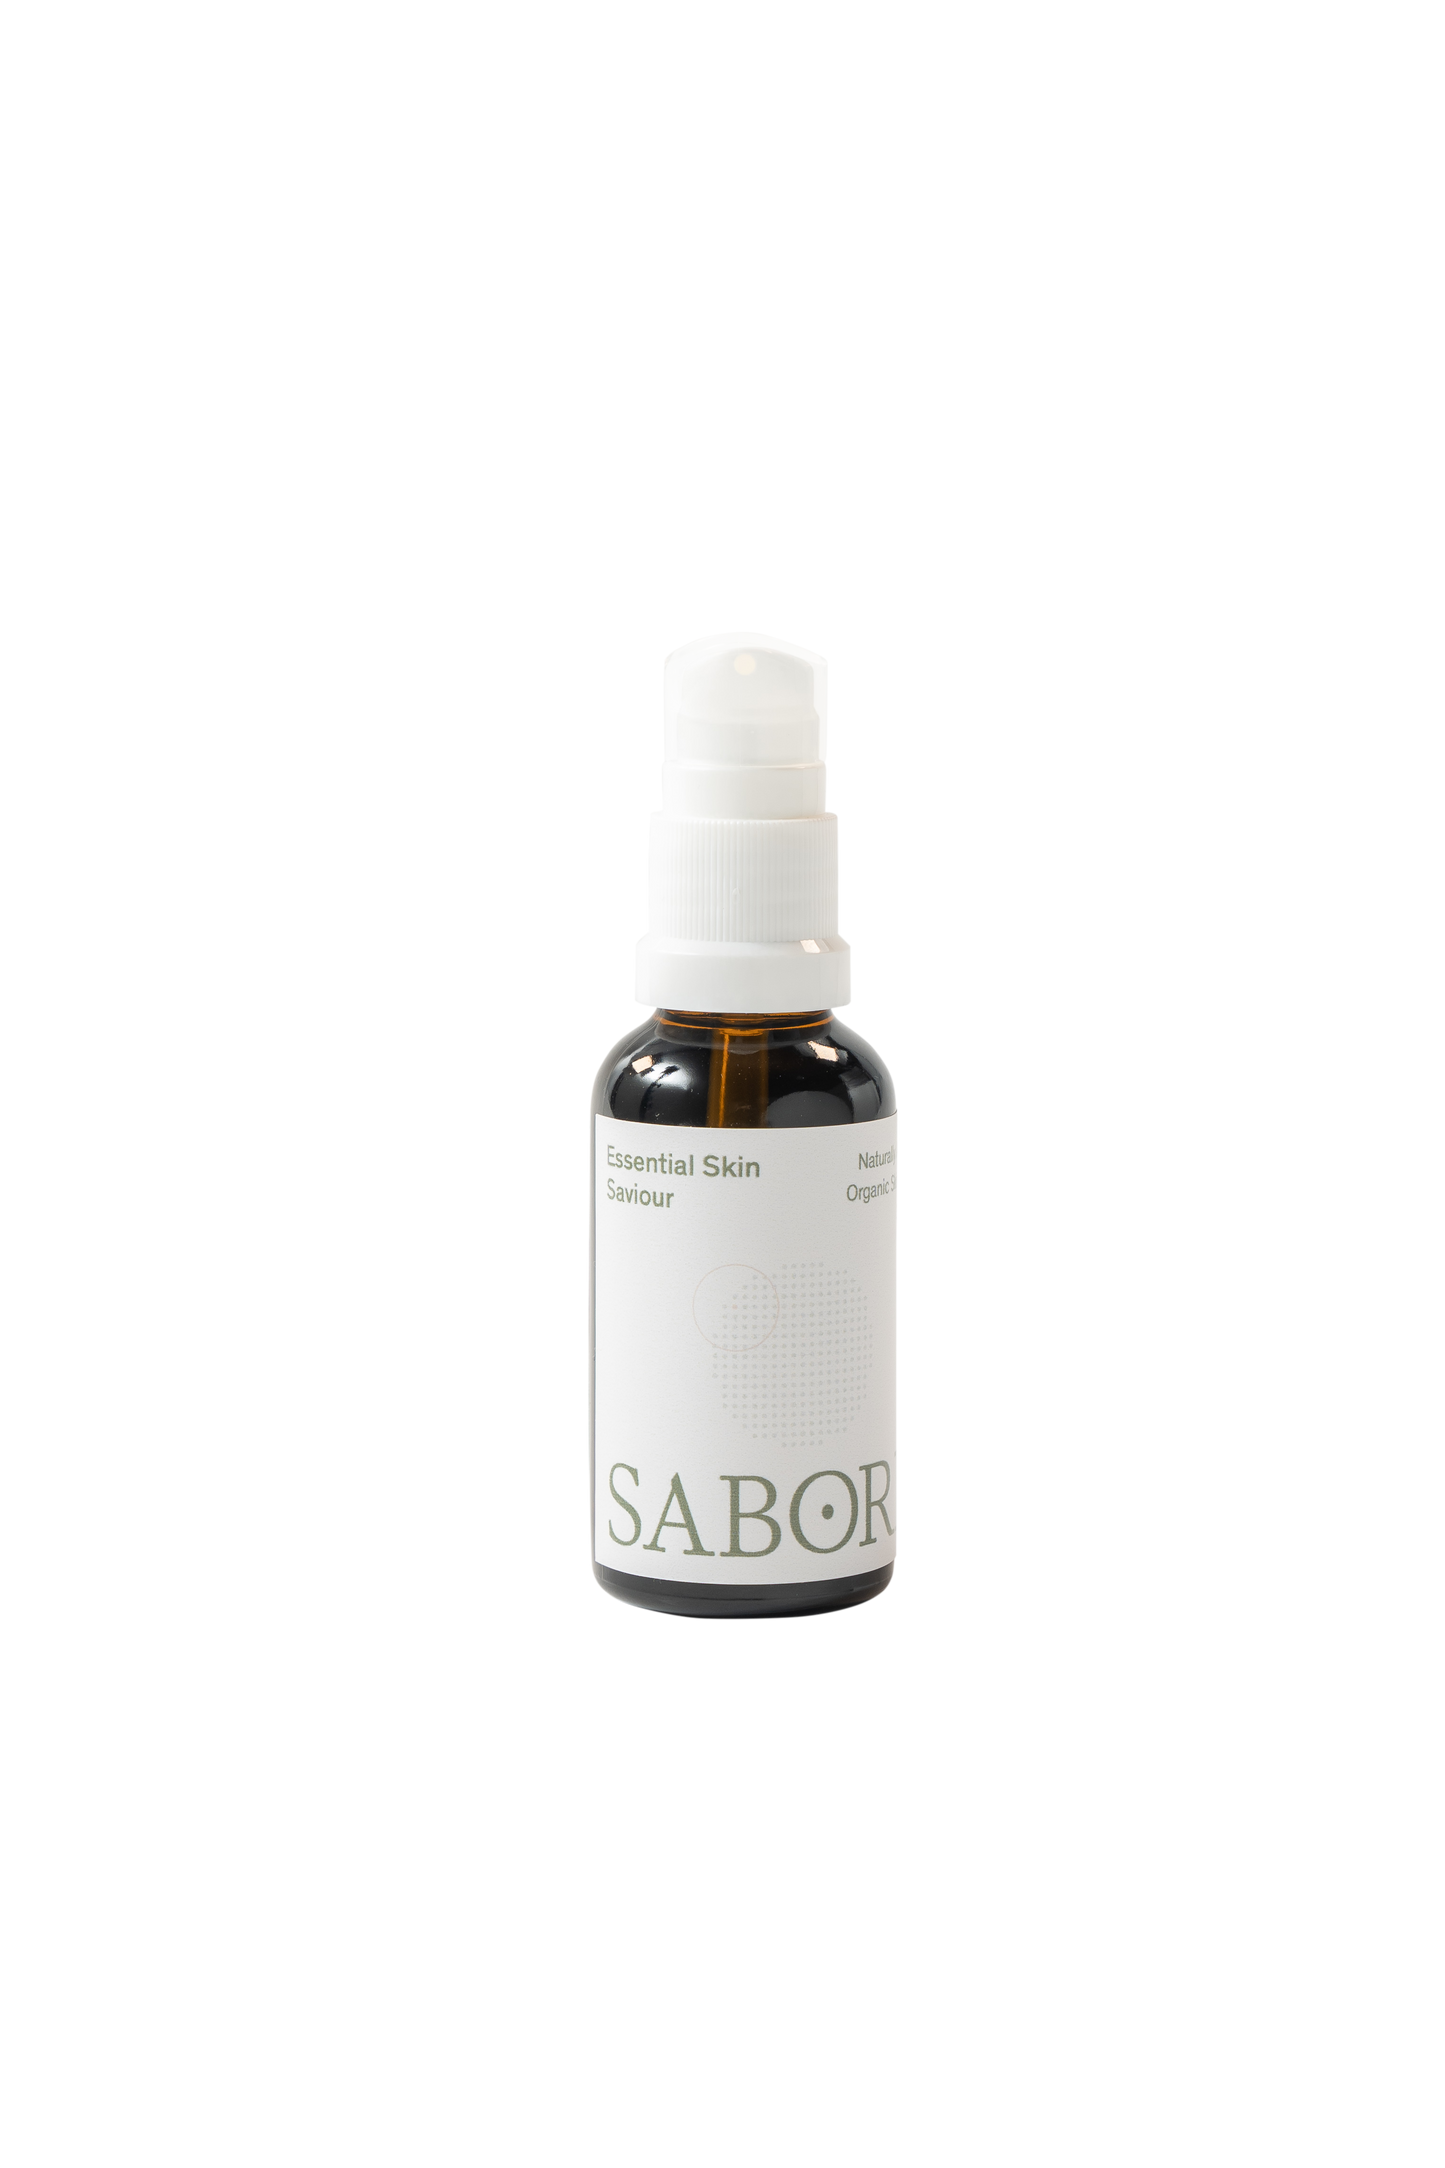 Sabore Essential Skin Saviour 30ml